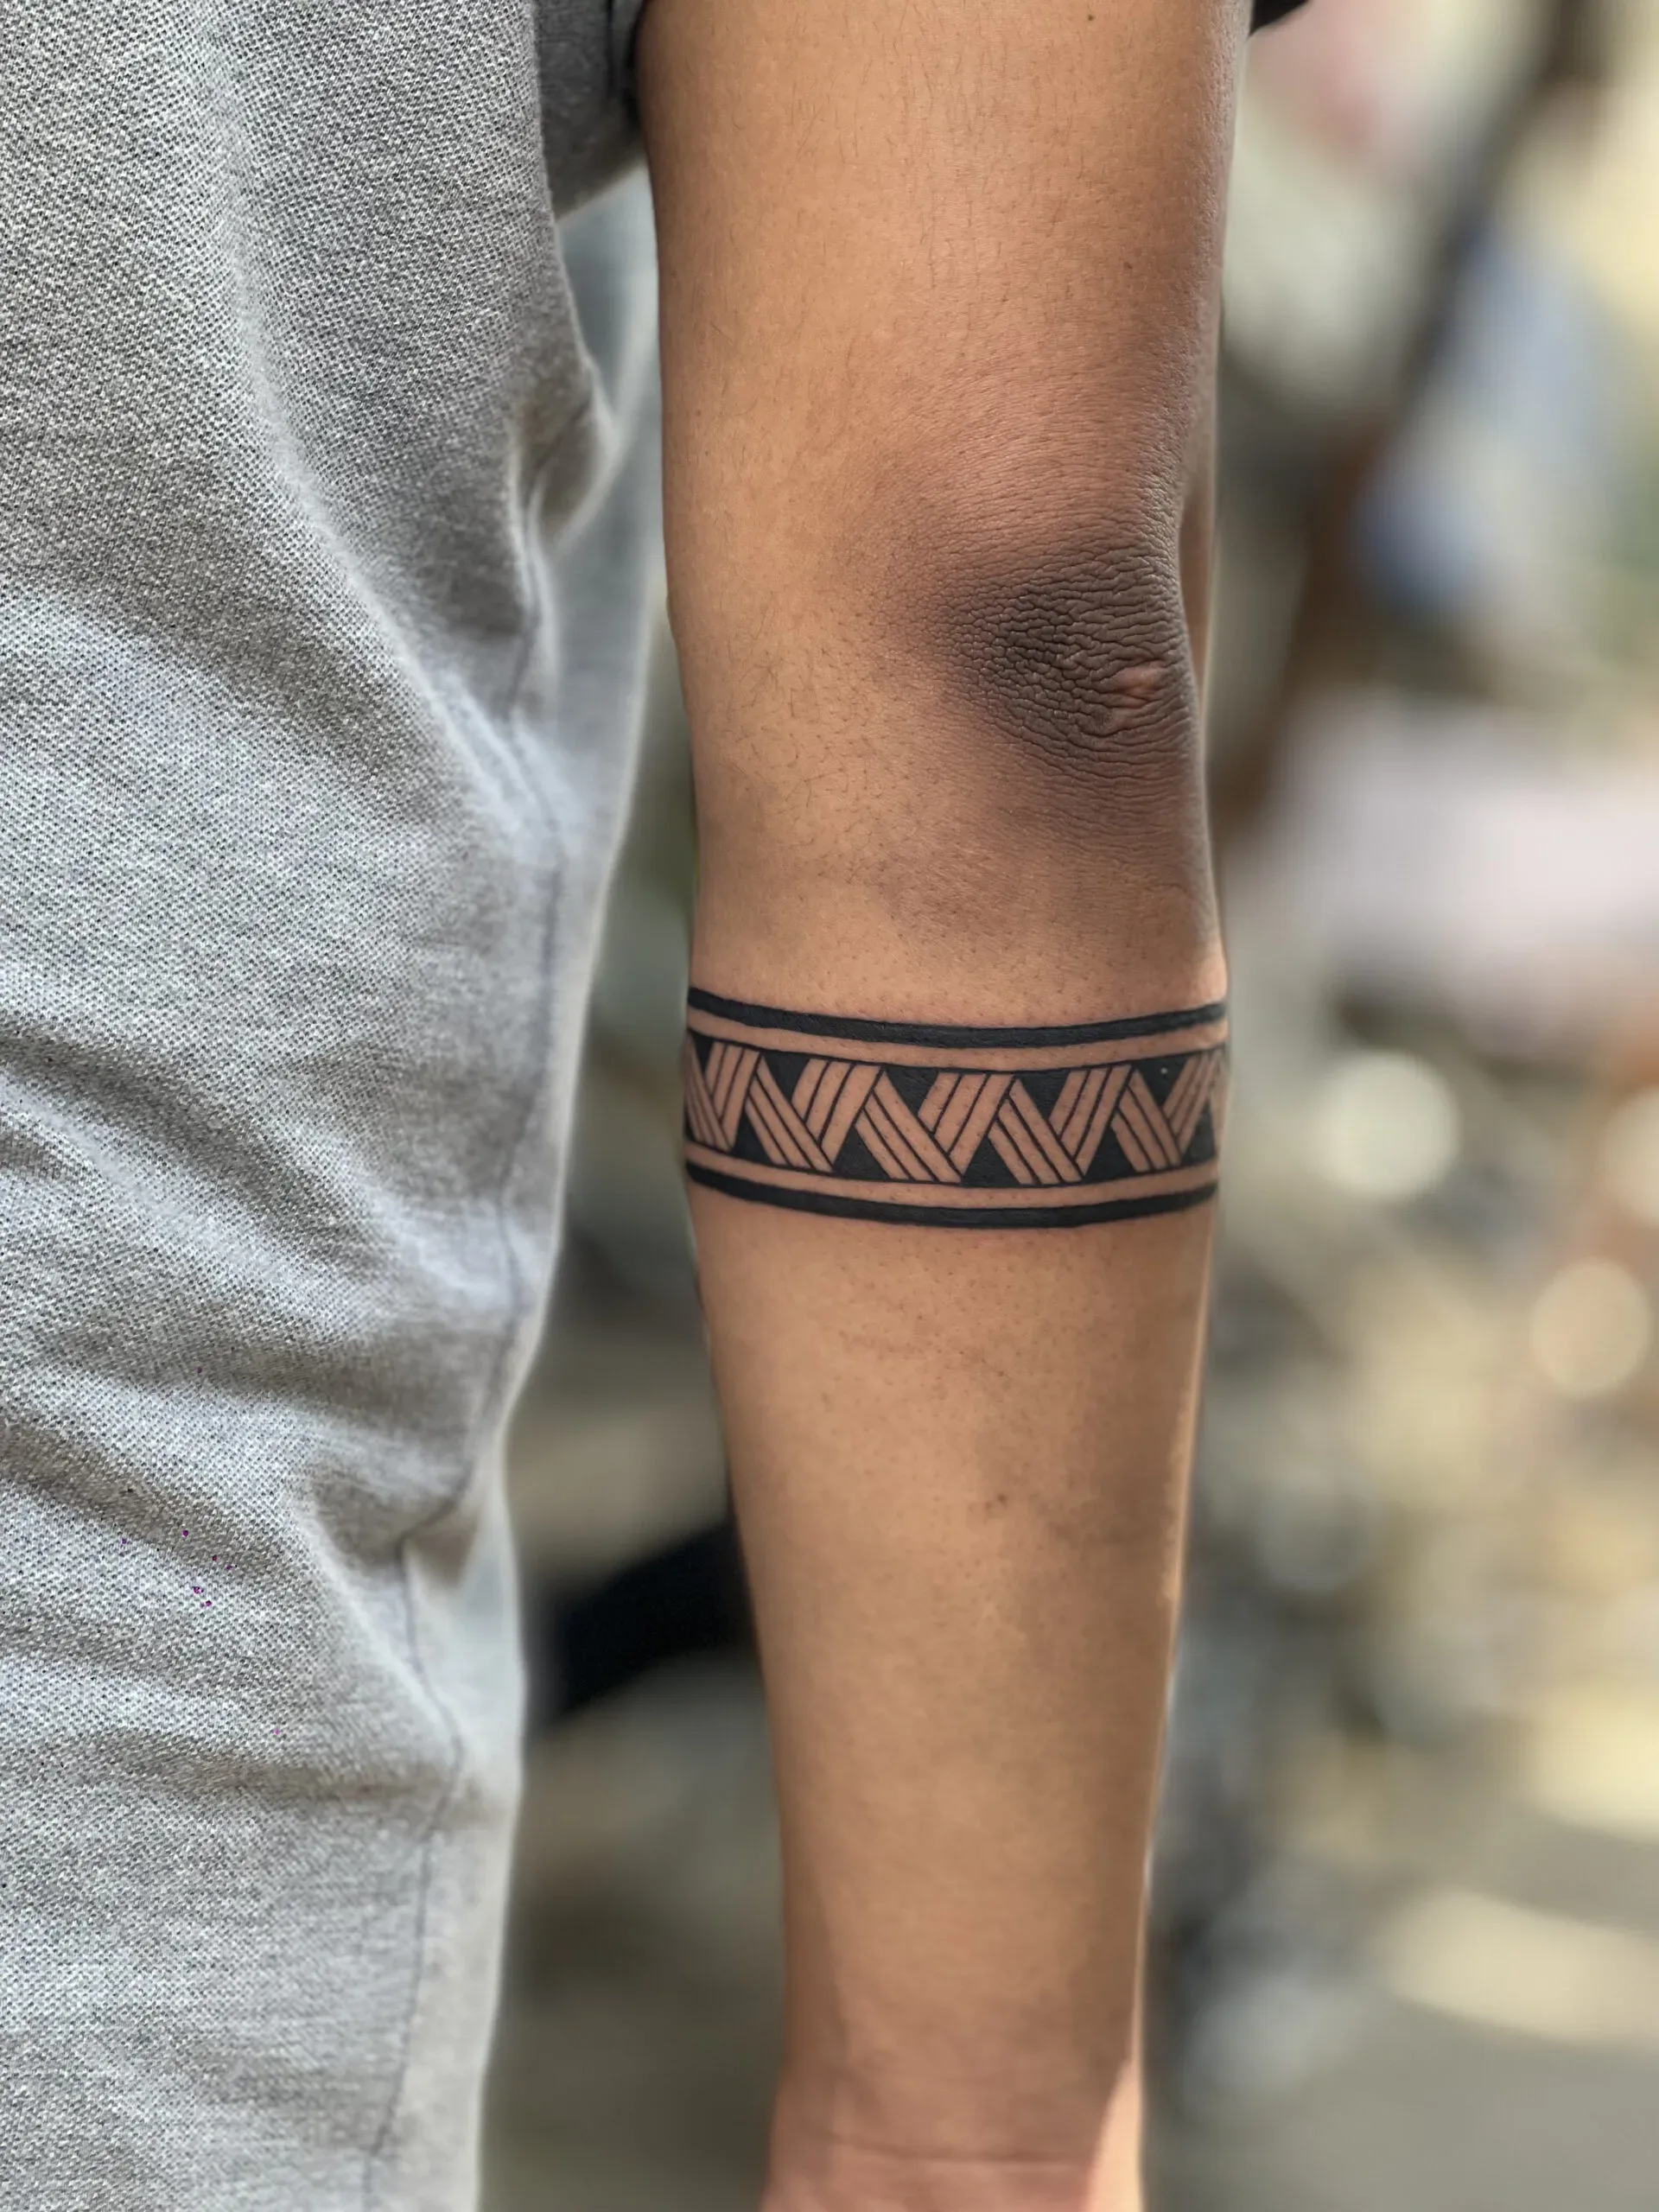 InkPulse Peelamedu - Maori band tattoo... (Tattoo Artist- Priyam) #tattoo  #inkpulsepeelamedu #coimbatore #Maori #design #calf #band | Facebook